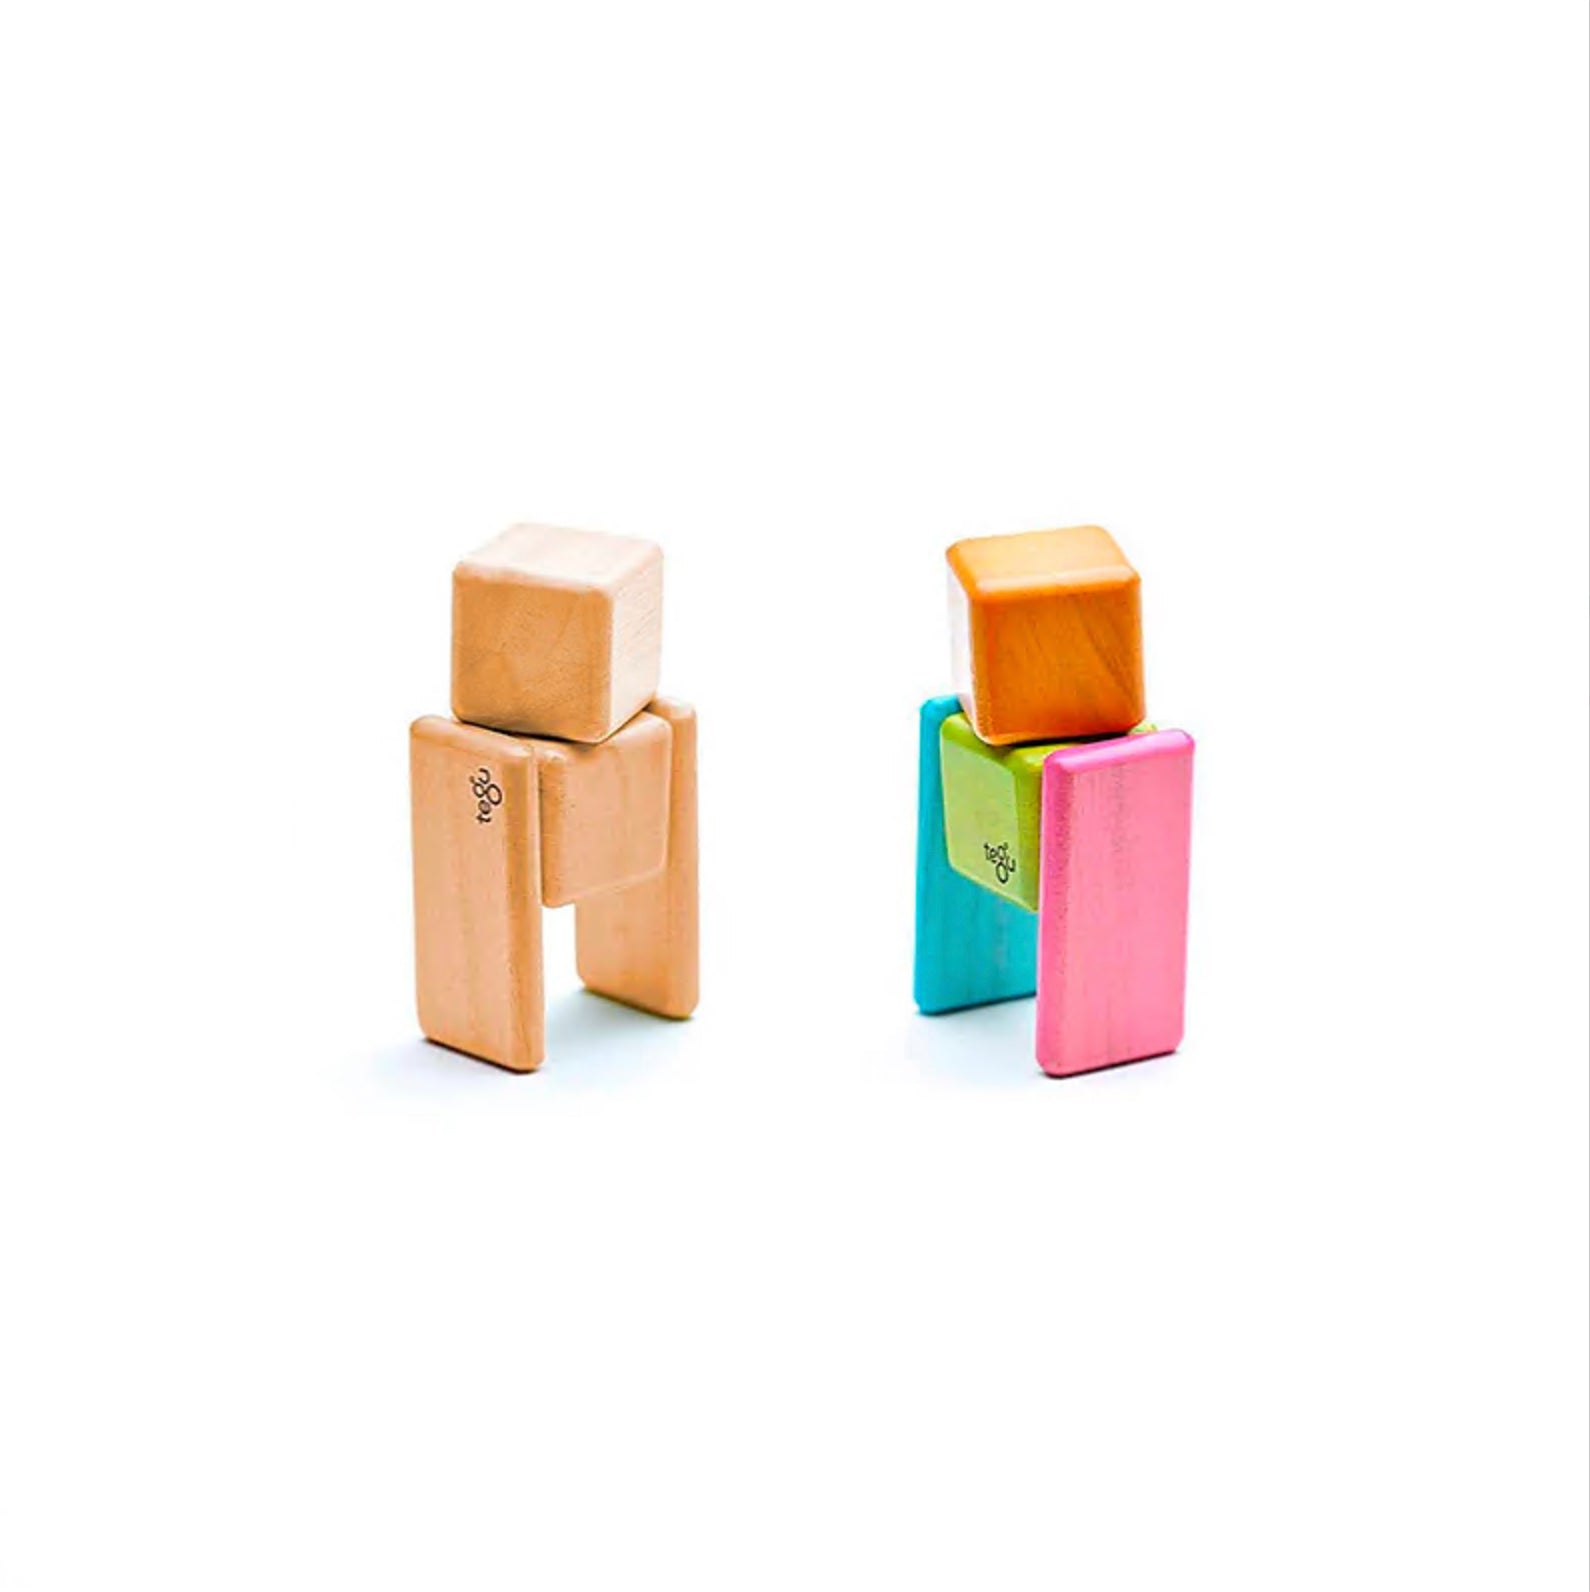 Tegu - Original Pocket Pouch Magnetic Wooden Block Set